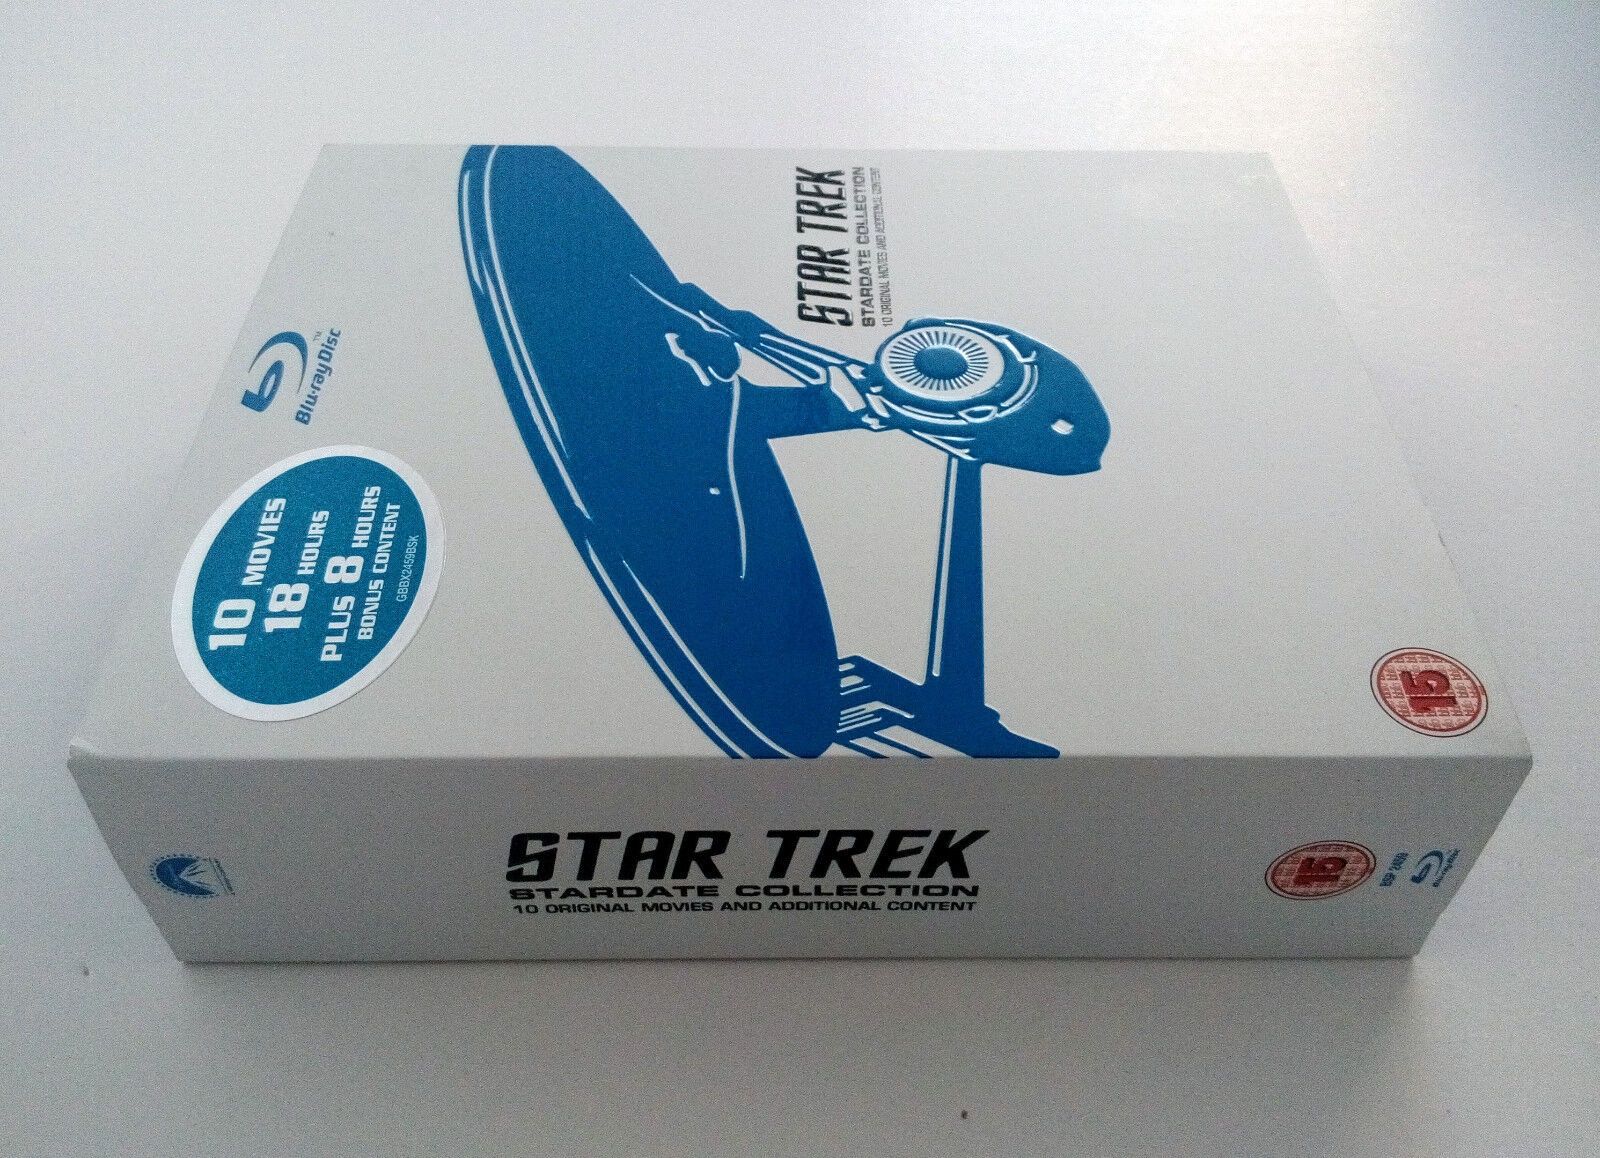 STAR TREK -Blu ray FILM, set box